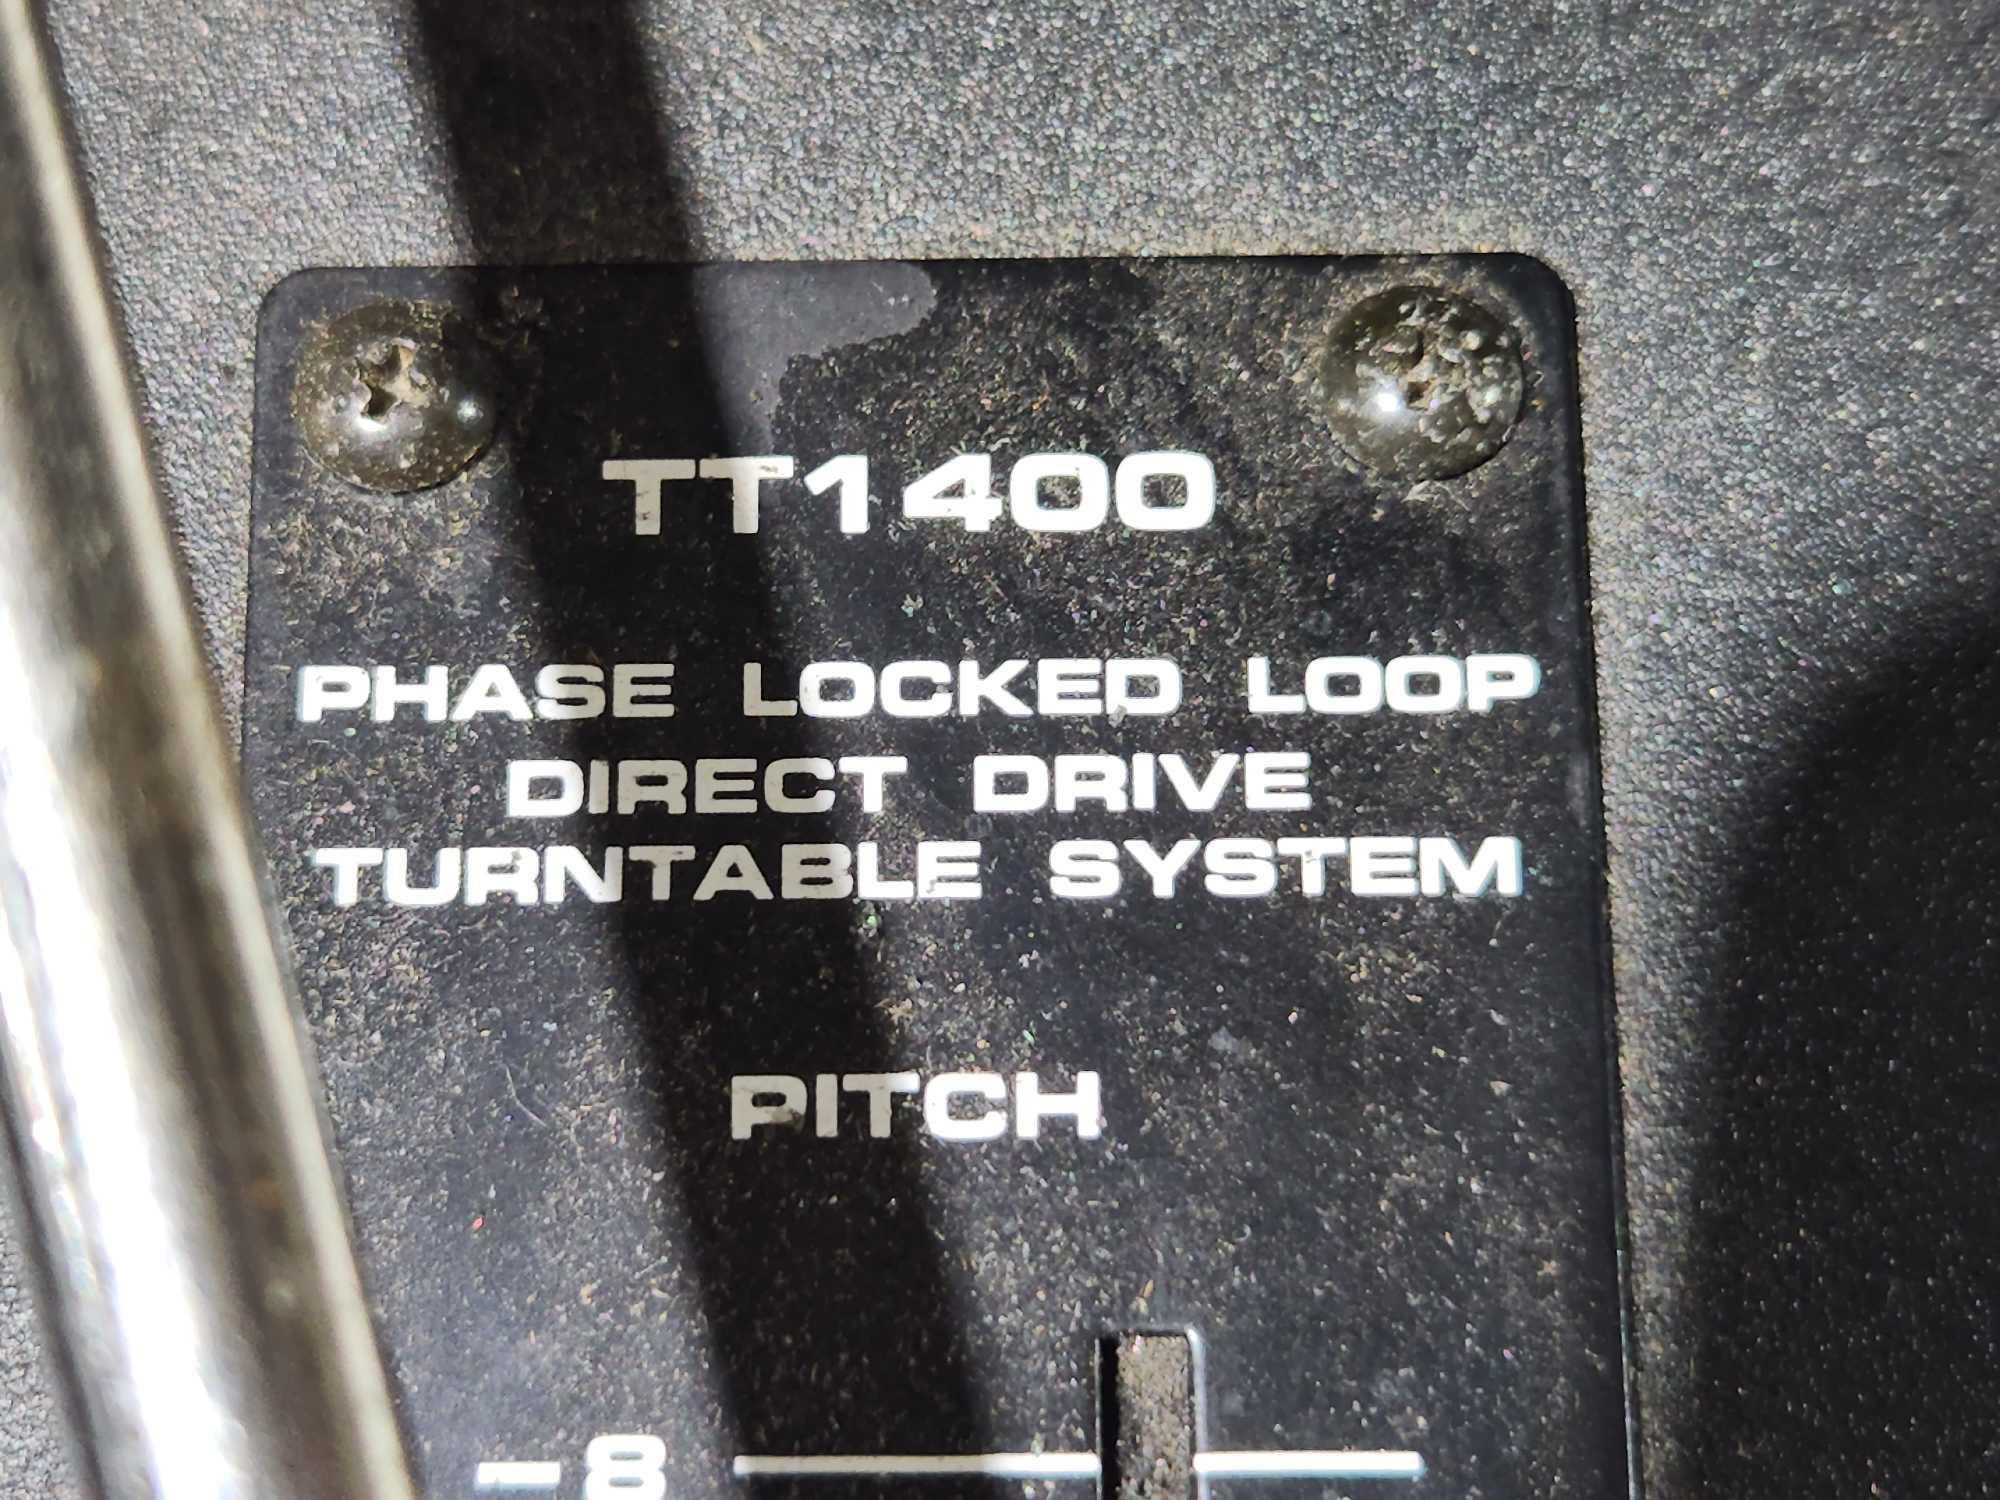 Numark model TT1400 turntable with case